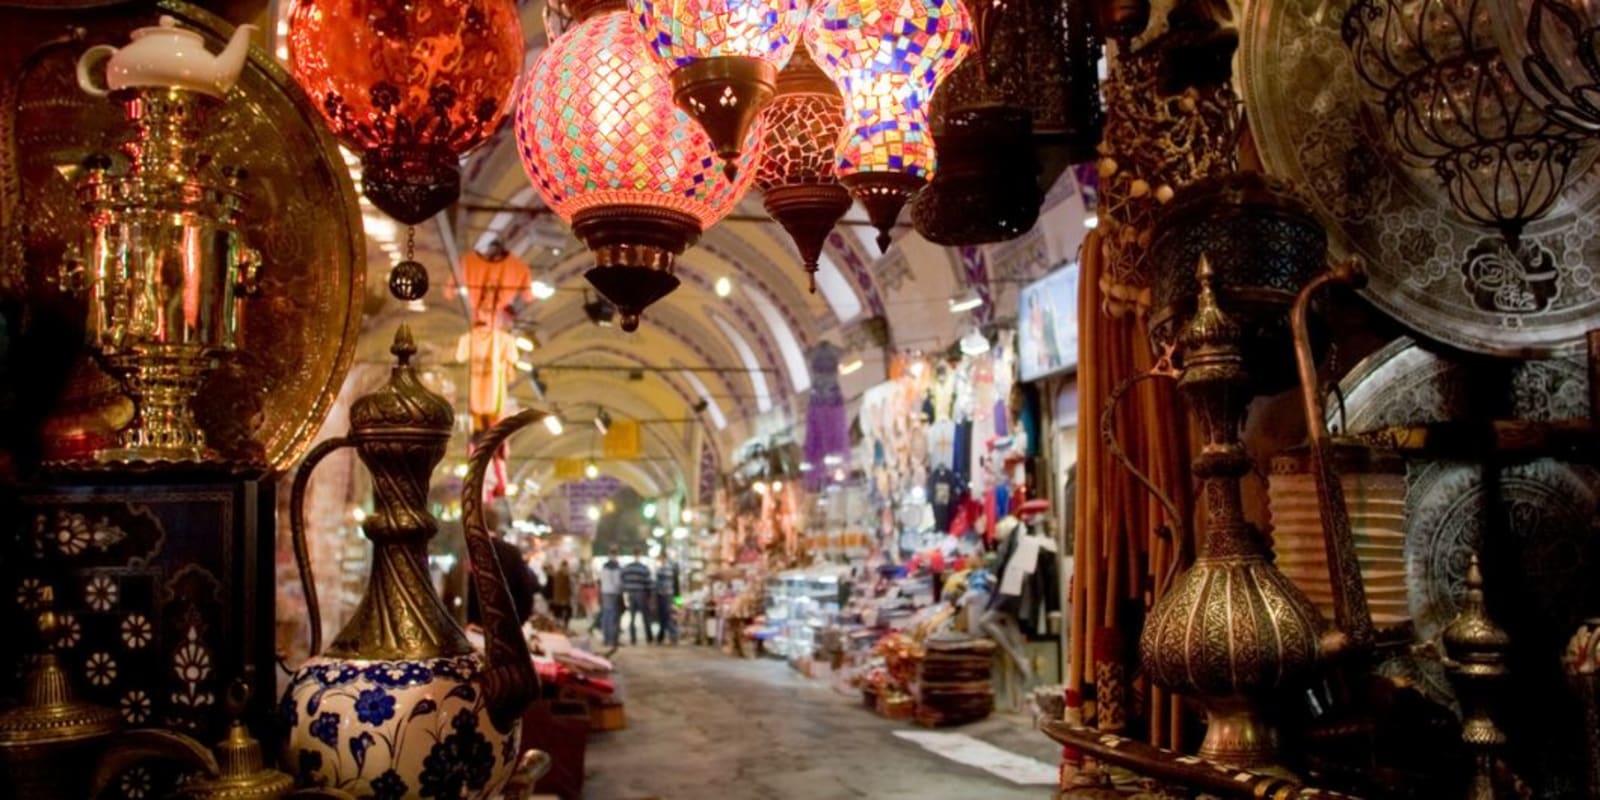 The Grand Bazaar in Turkey